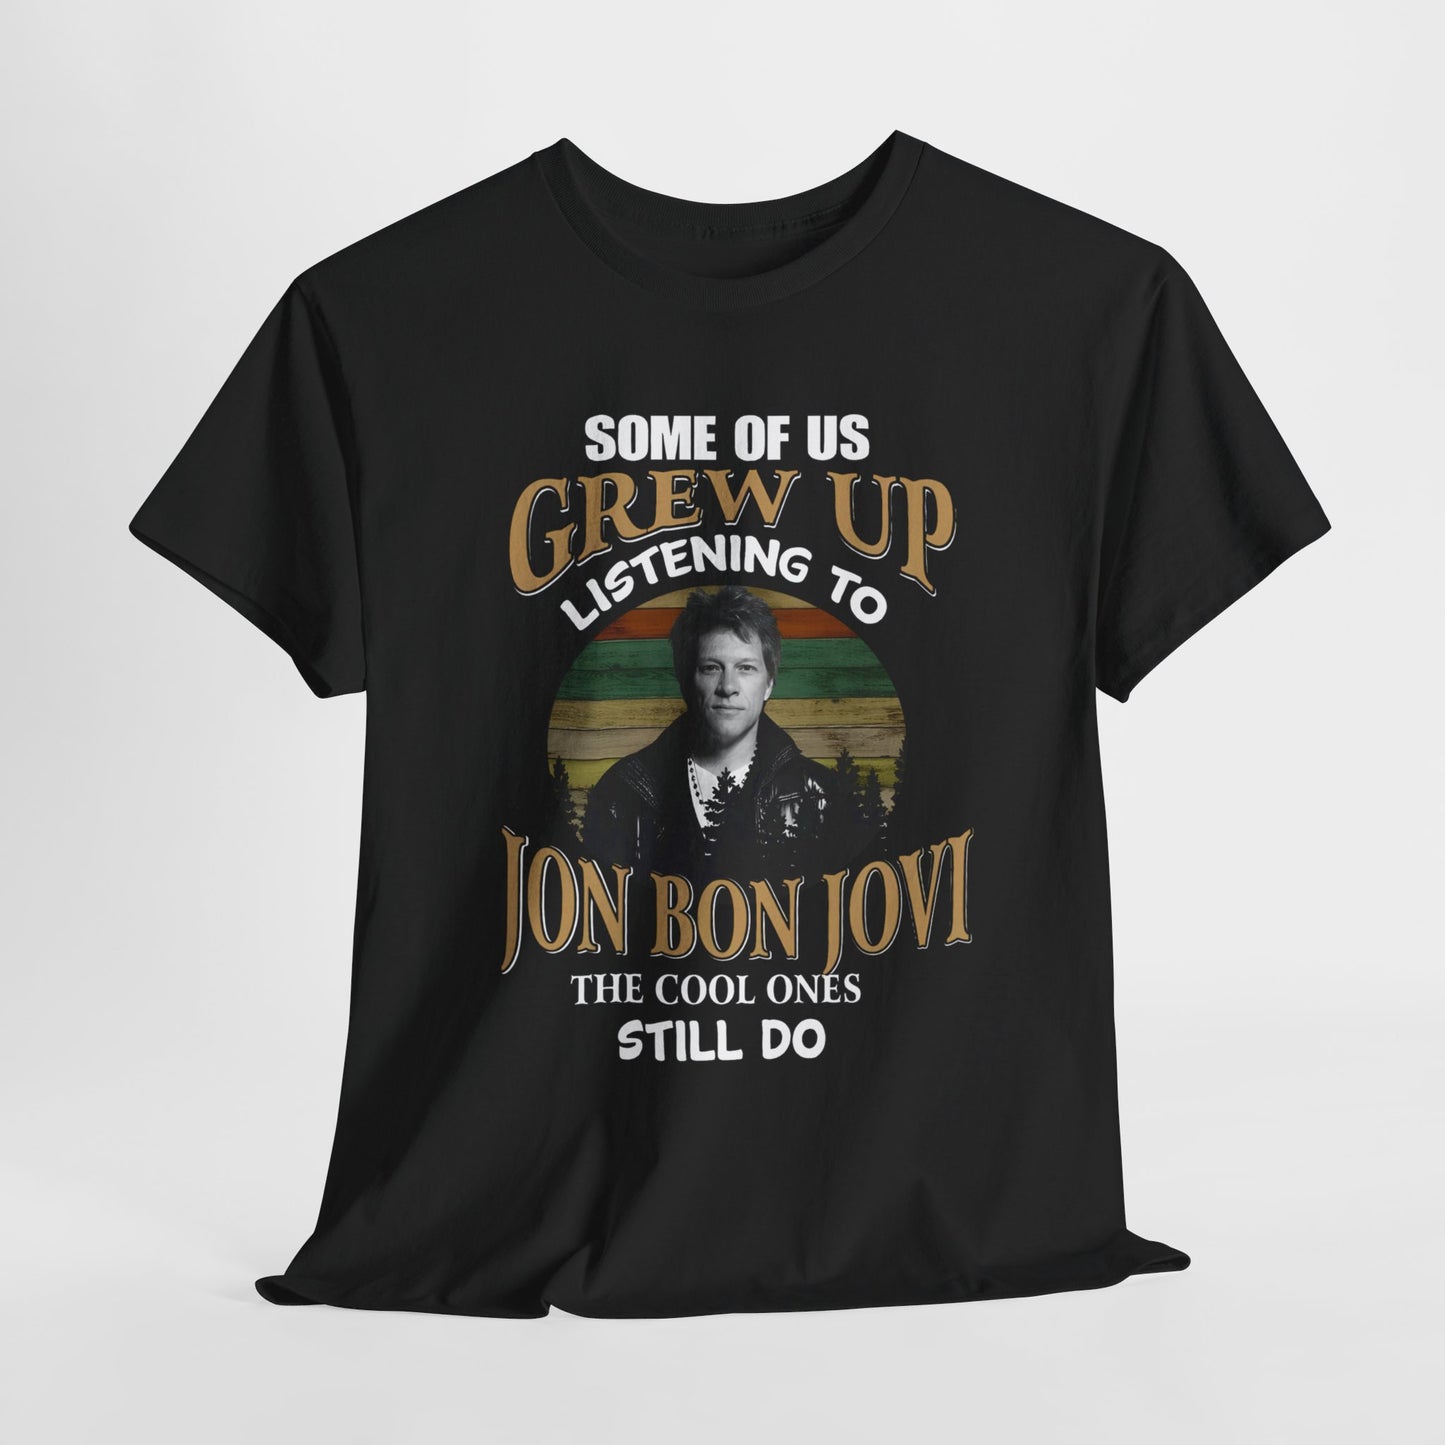 Jon Bon Jovi High Quality Printed Unisex Heavy Cotton T-shirt